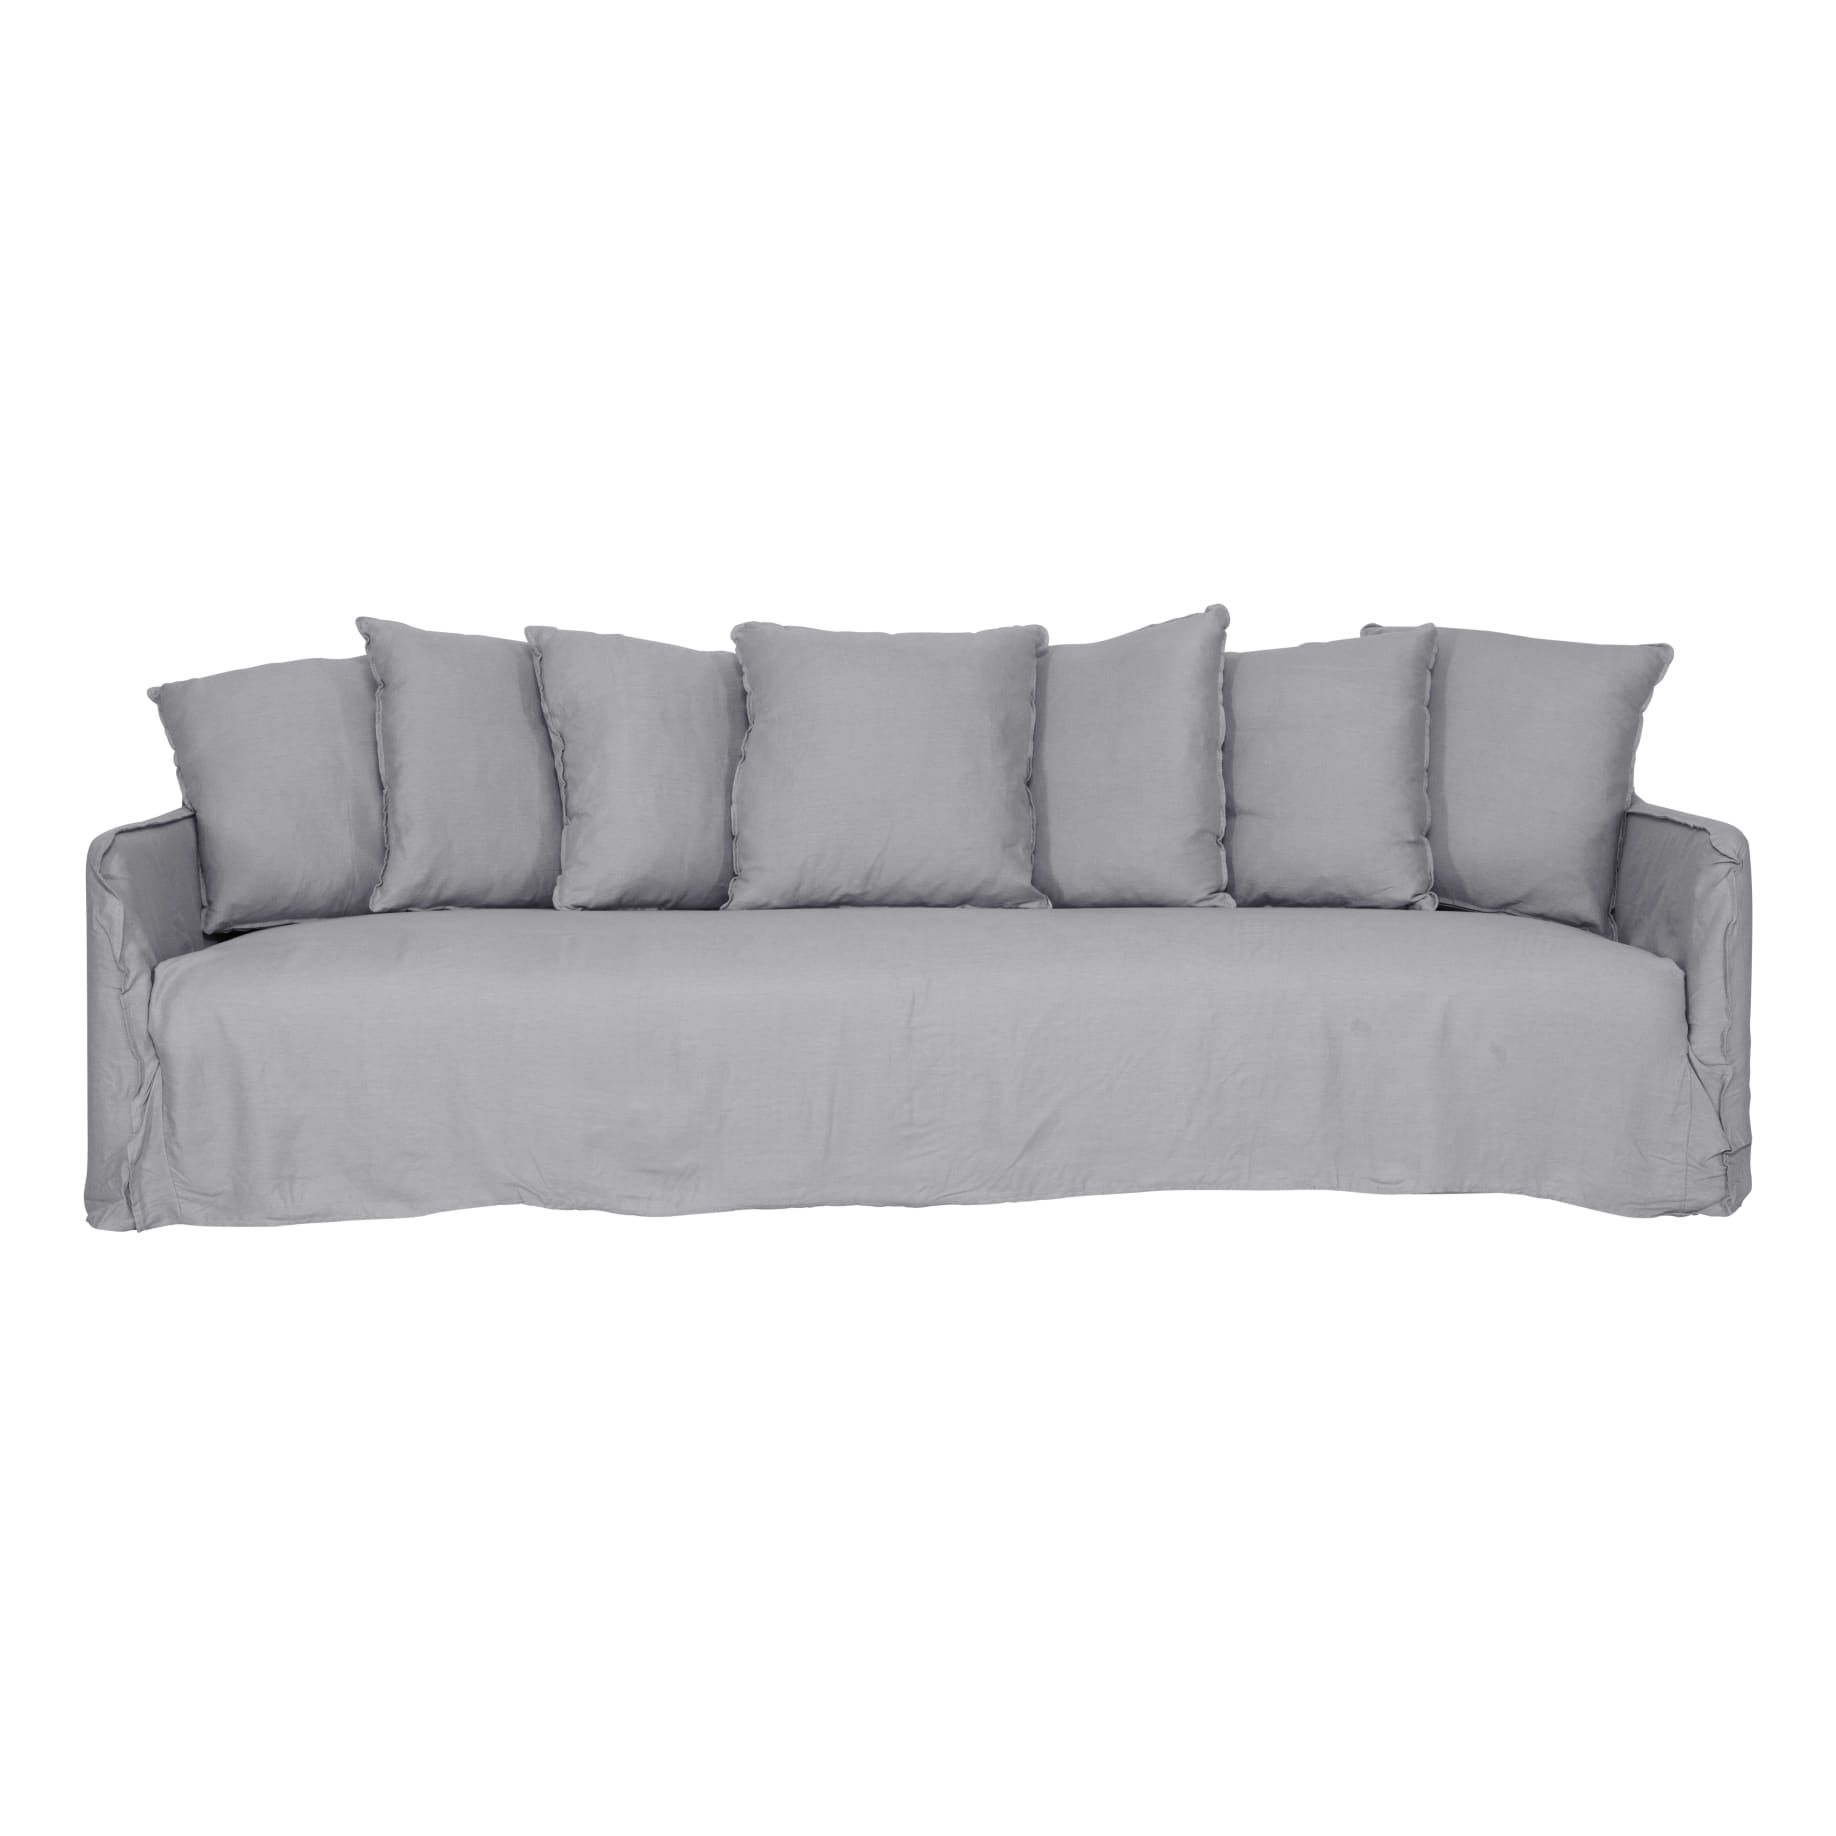 Whitehaven 3 Seater Sofa in Skye Light Grey